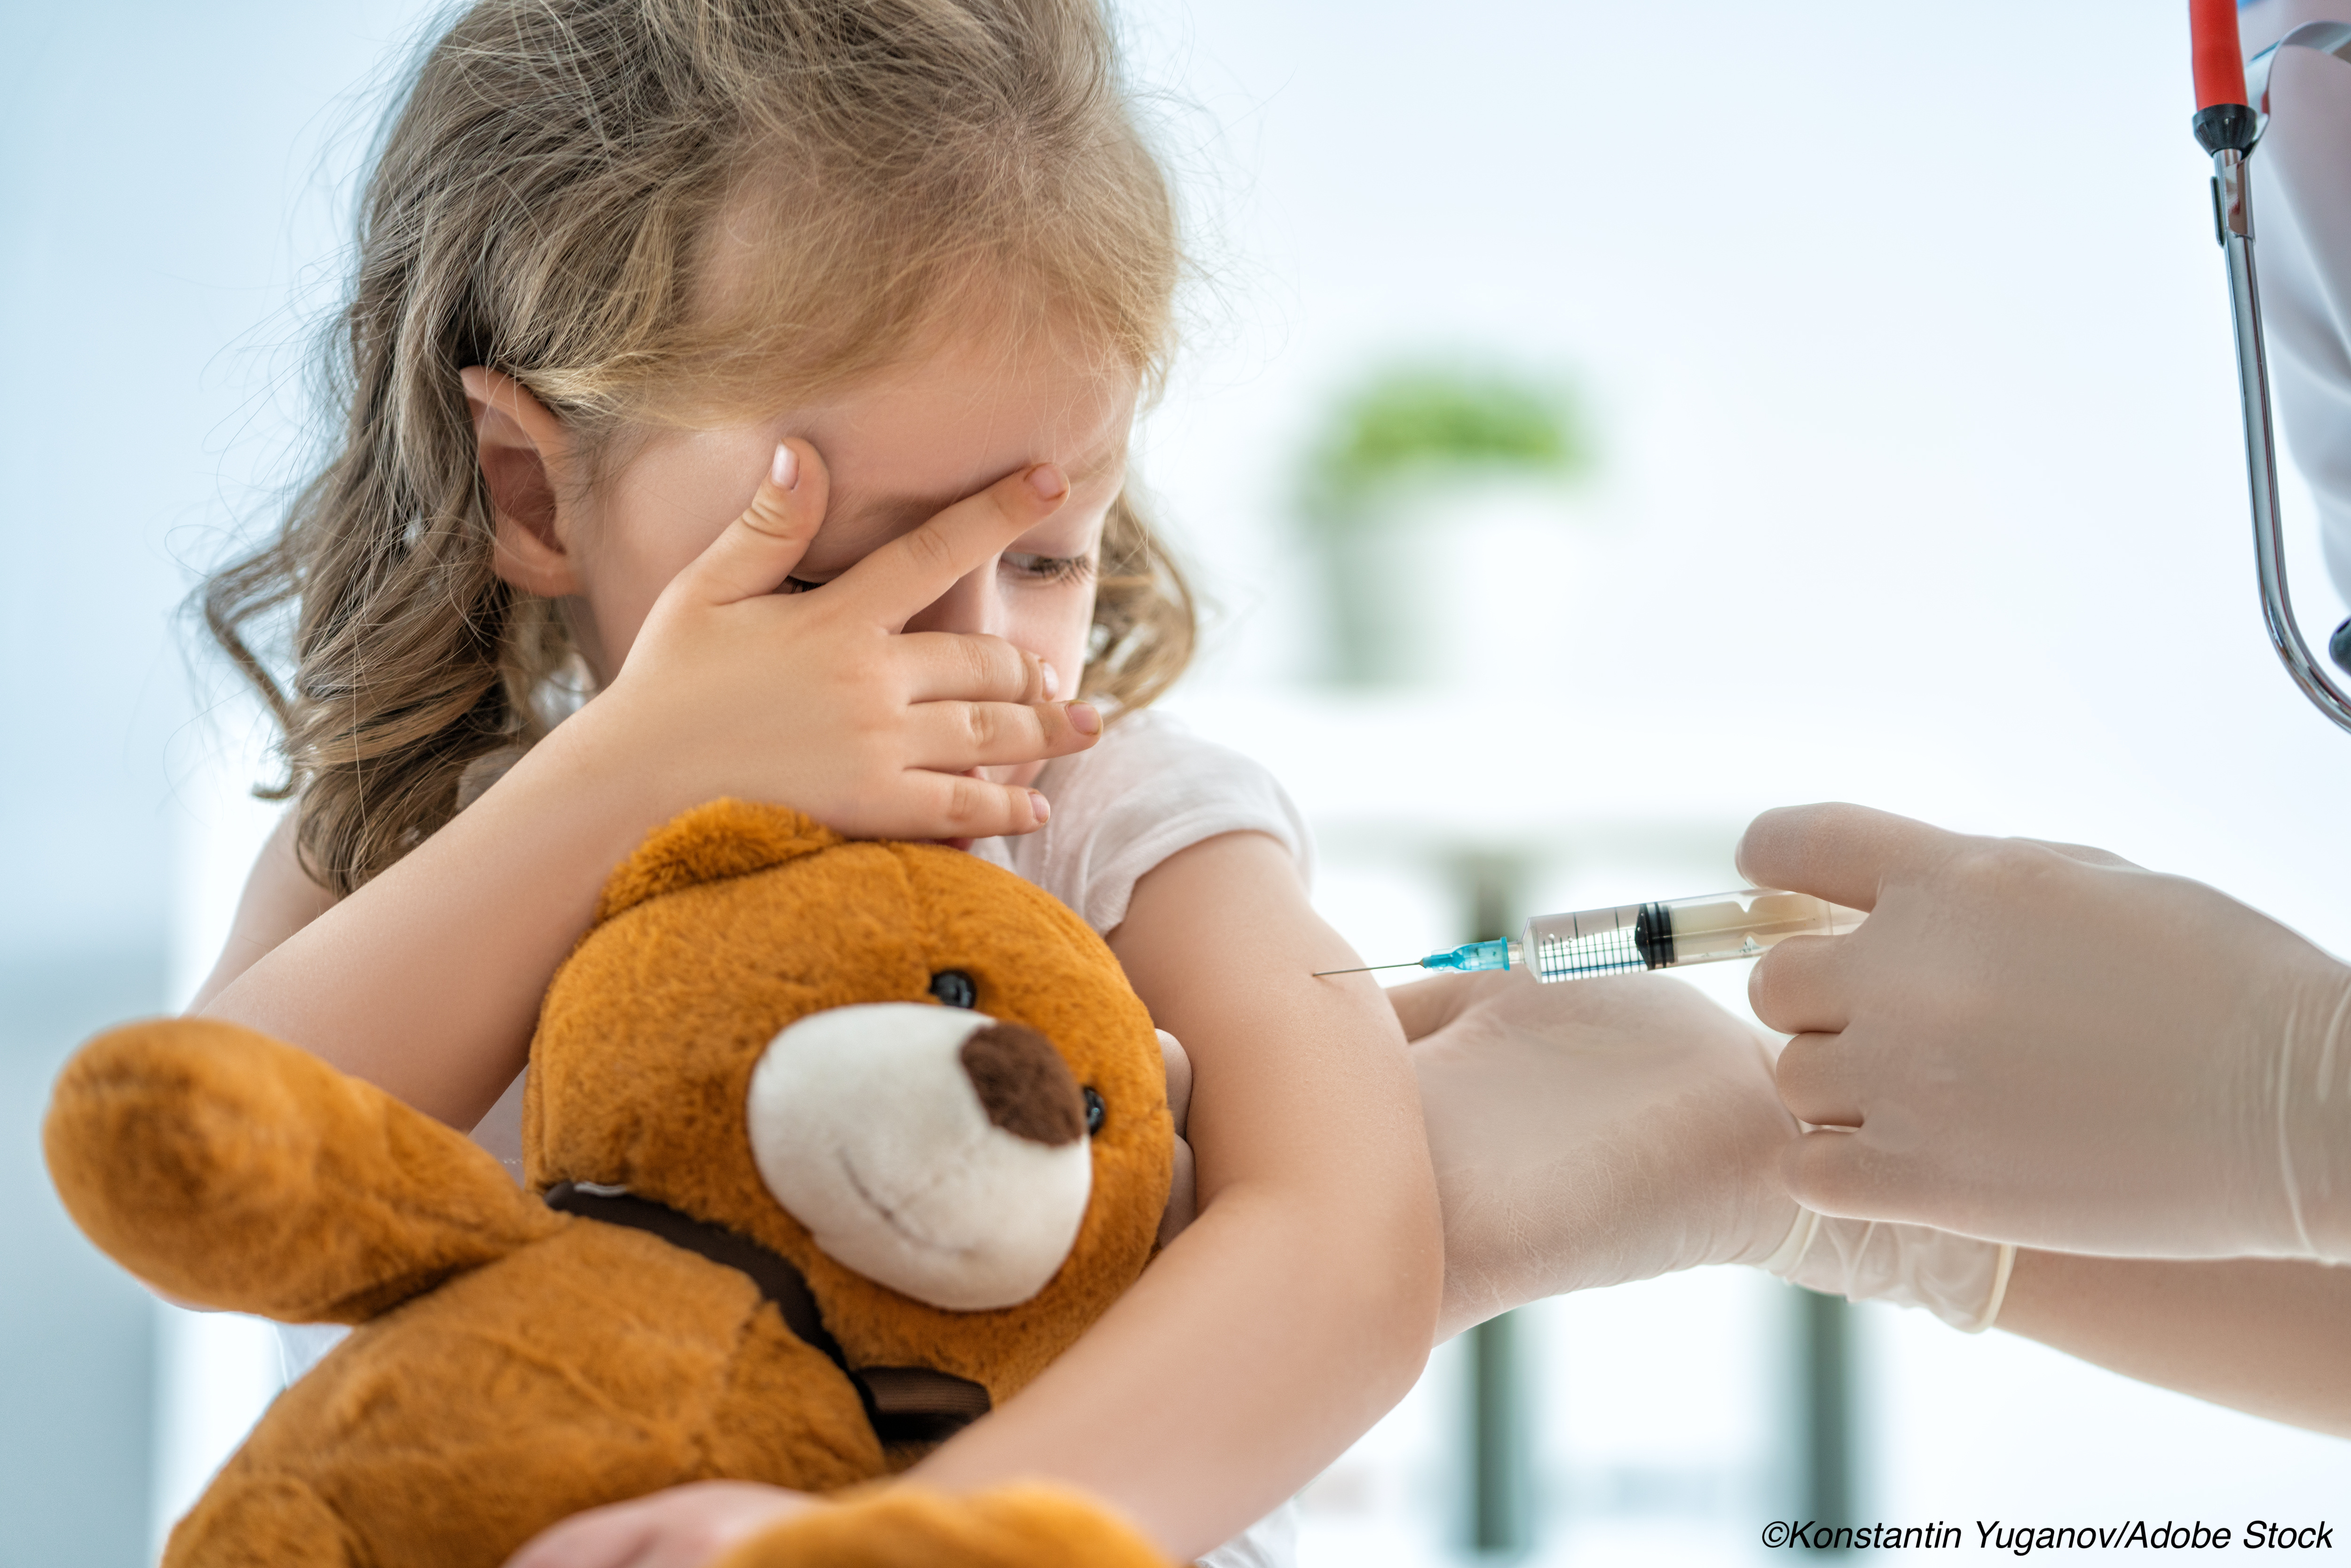 Covid-19: Pediatric Vax Rates Decline During Pandemic